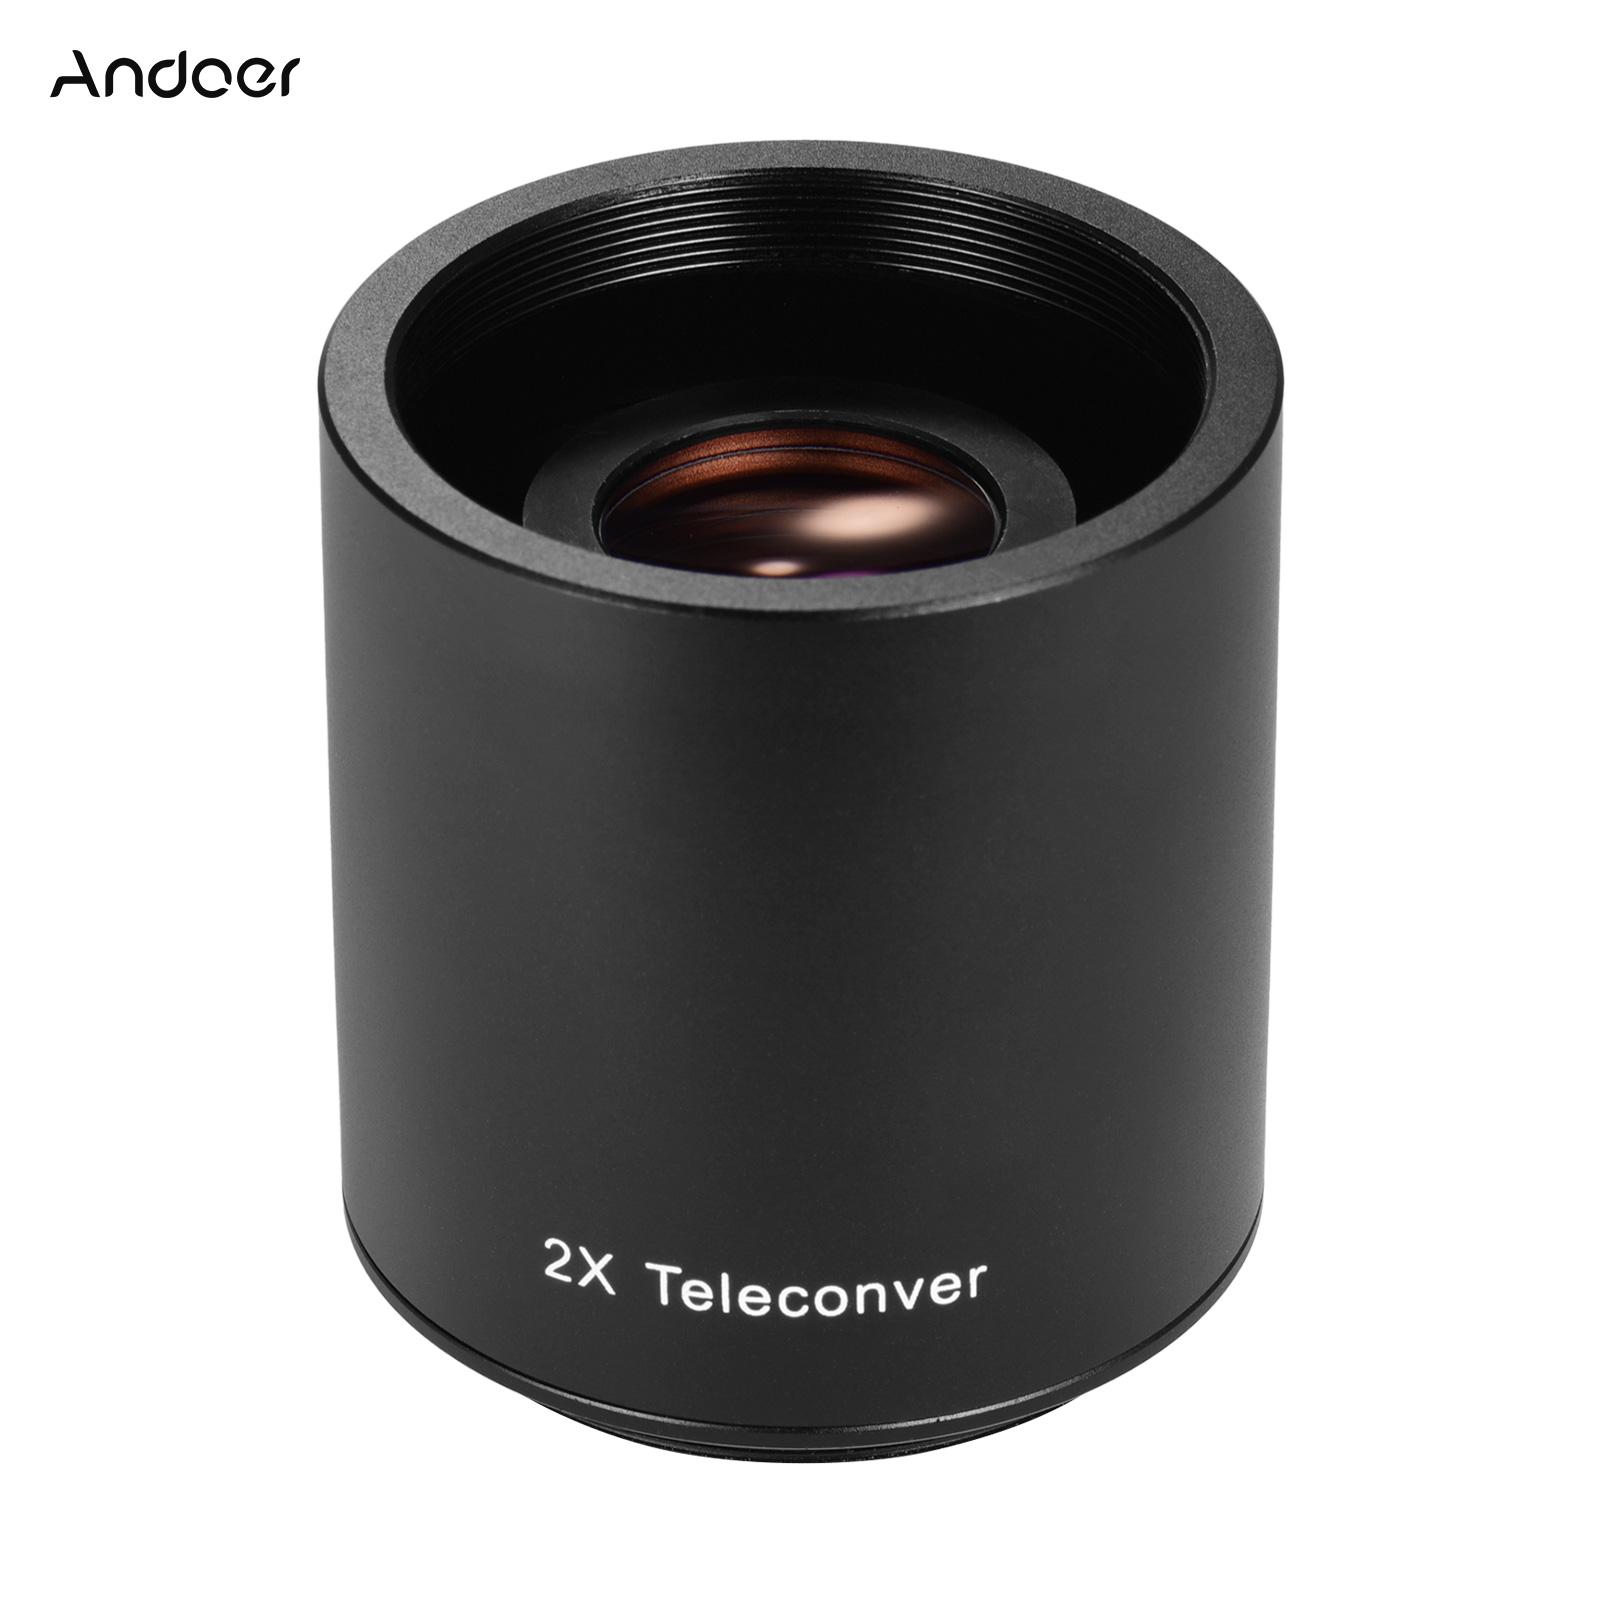 Andoer 2X Teleconverter Lens Manual Focus Converter Lens for 650-1300mm 500mm 420-800mm Camera